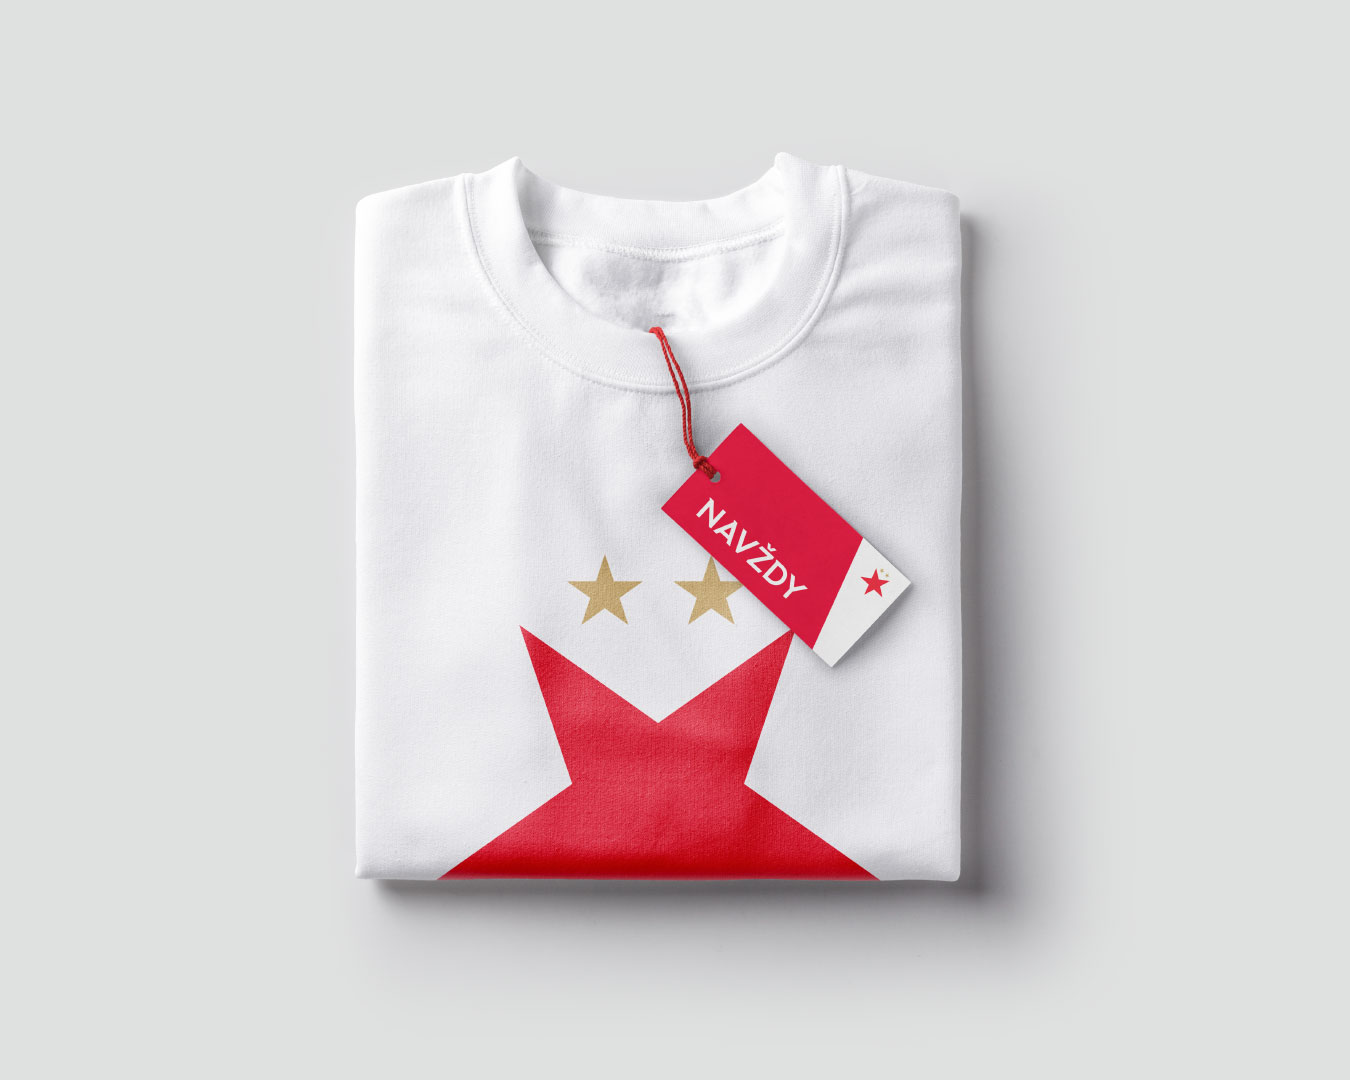 Slavia Rebranding - Identity Application T-Shirt